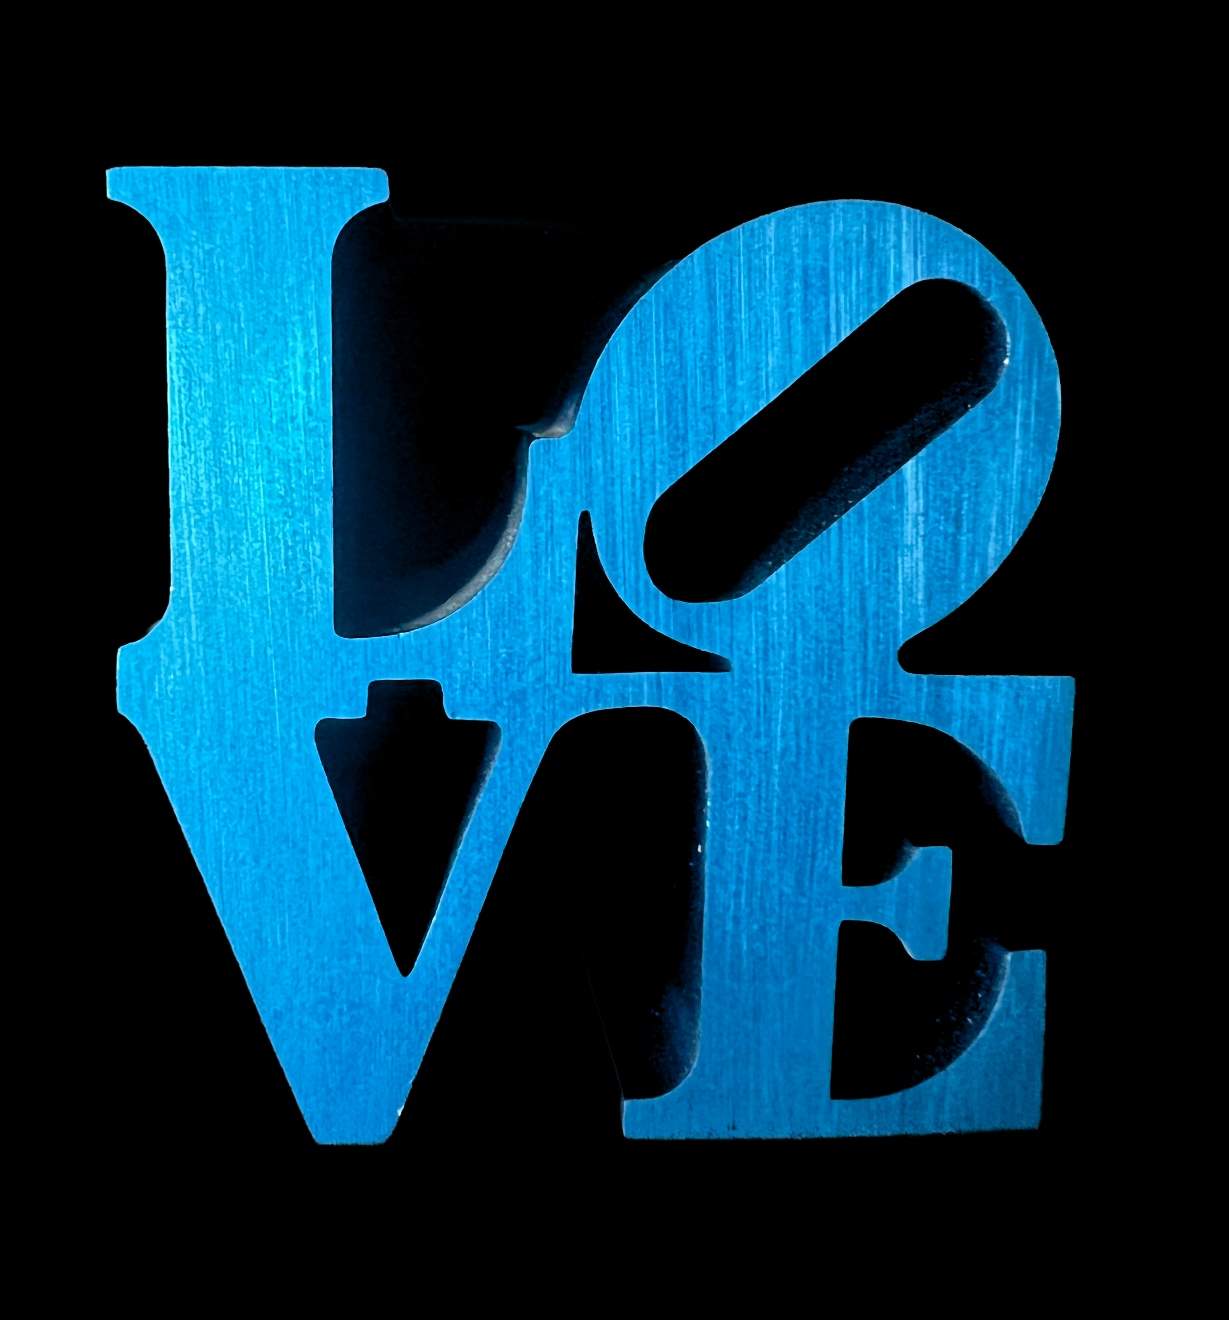 Robert Indiana - Love (Blue)